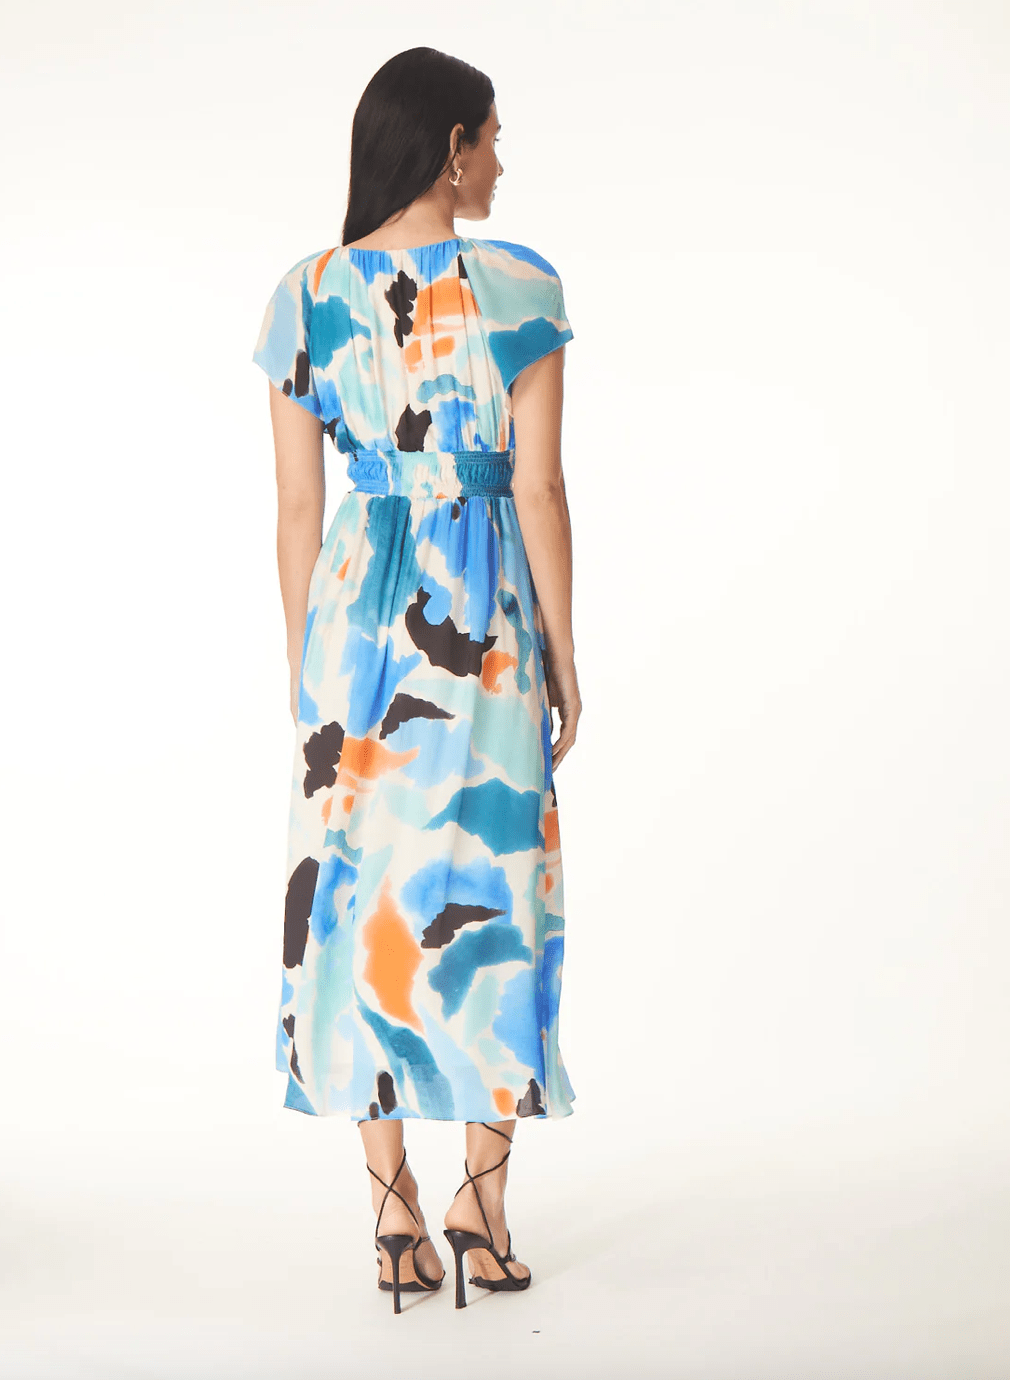 Gilner Farrar Mika Dress in Matisse Print - Estilo Boutique